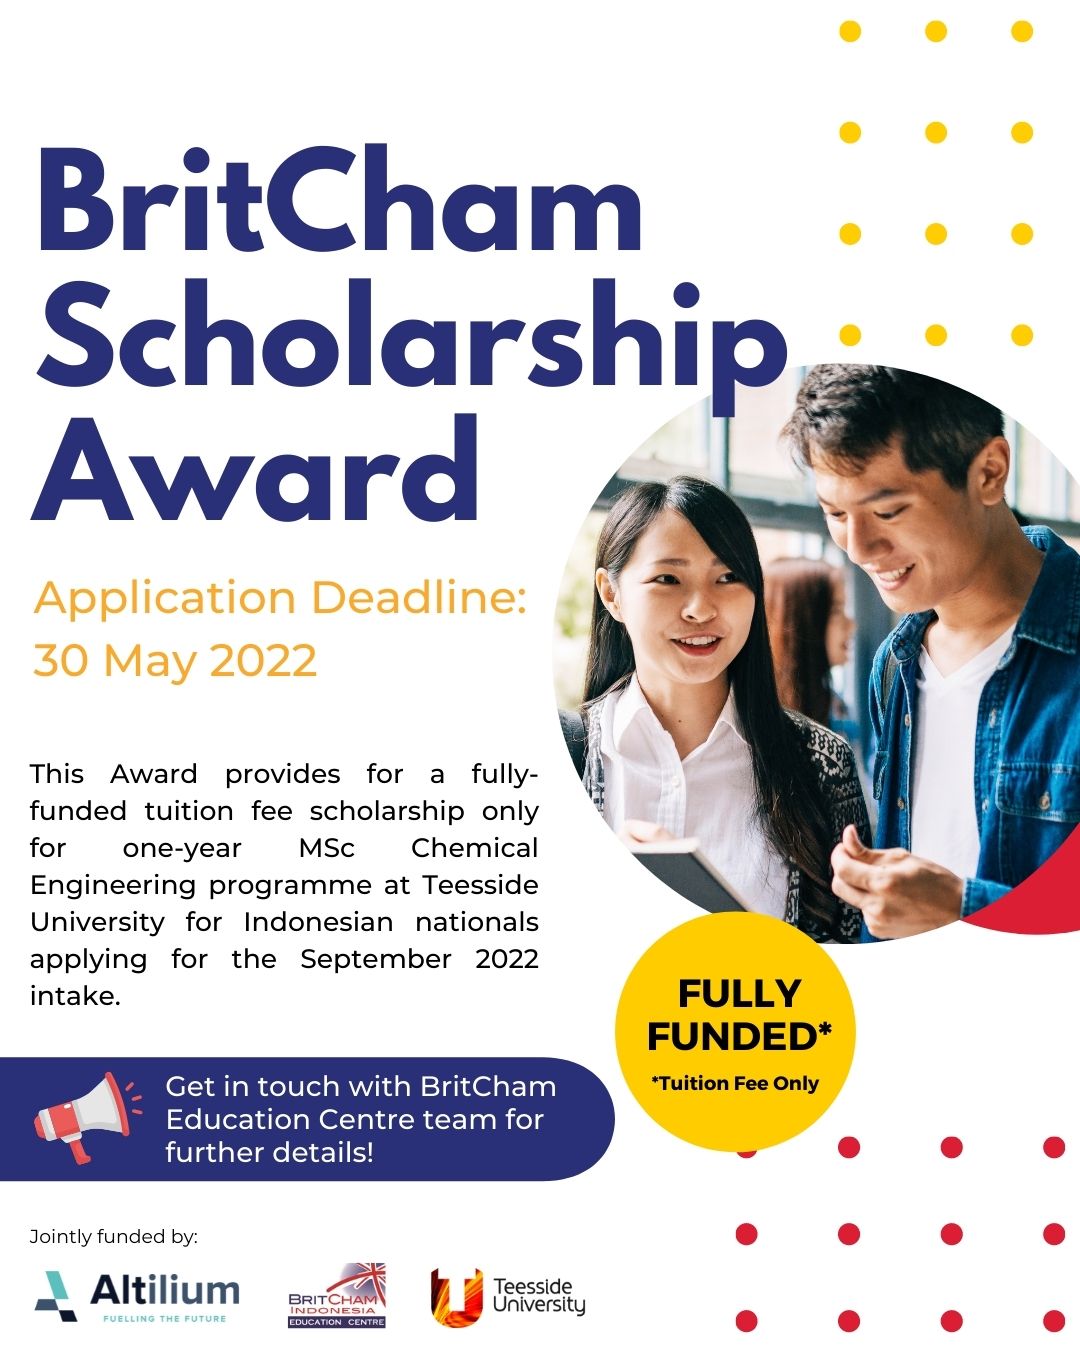 [BritCham Scholarship Award] MSc Chemical Engineering at Teesside University for September 2022 intake